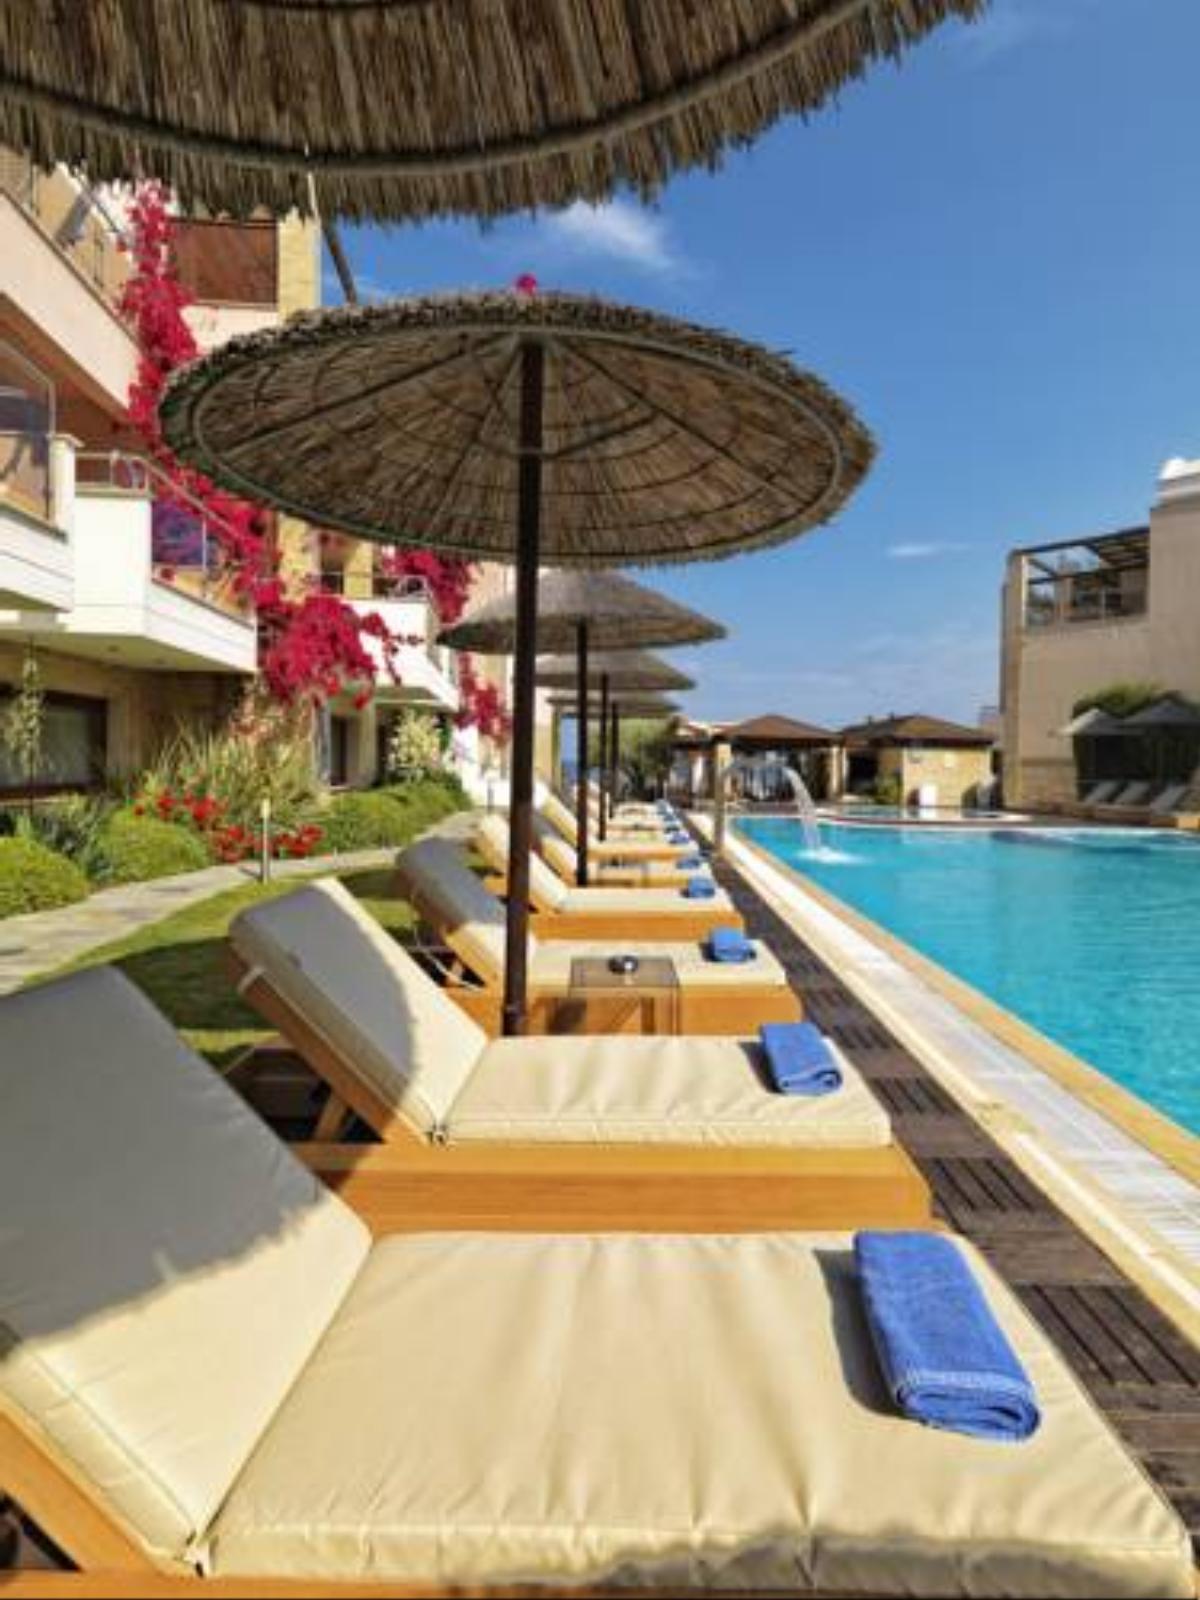 Olympion Sunset Hotel Fourka Greece